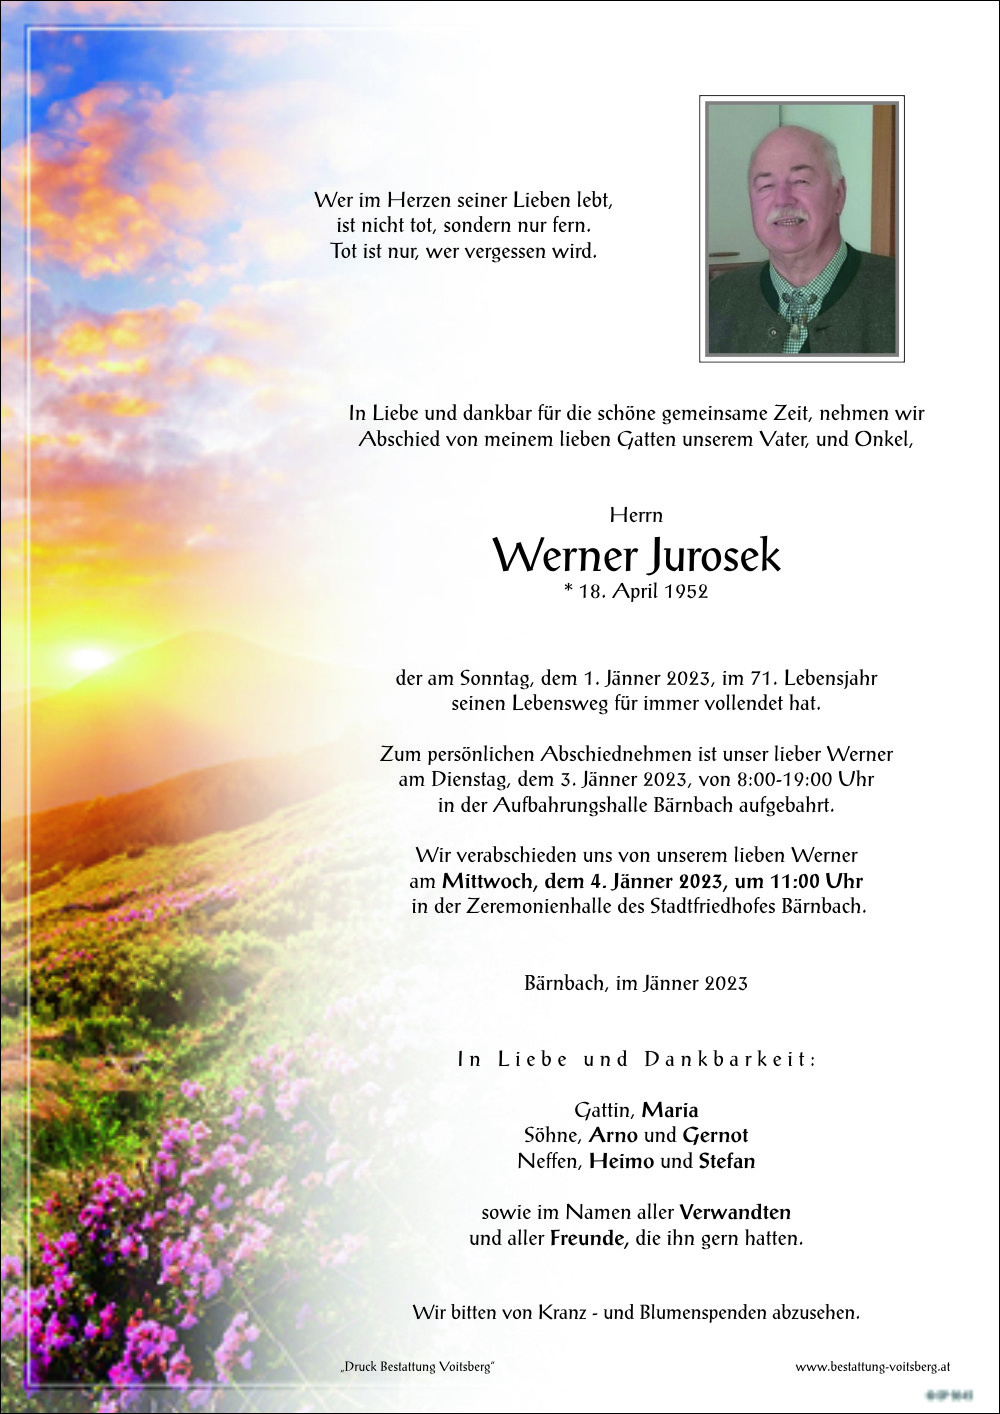 Werner Jurosek